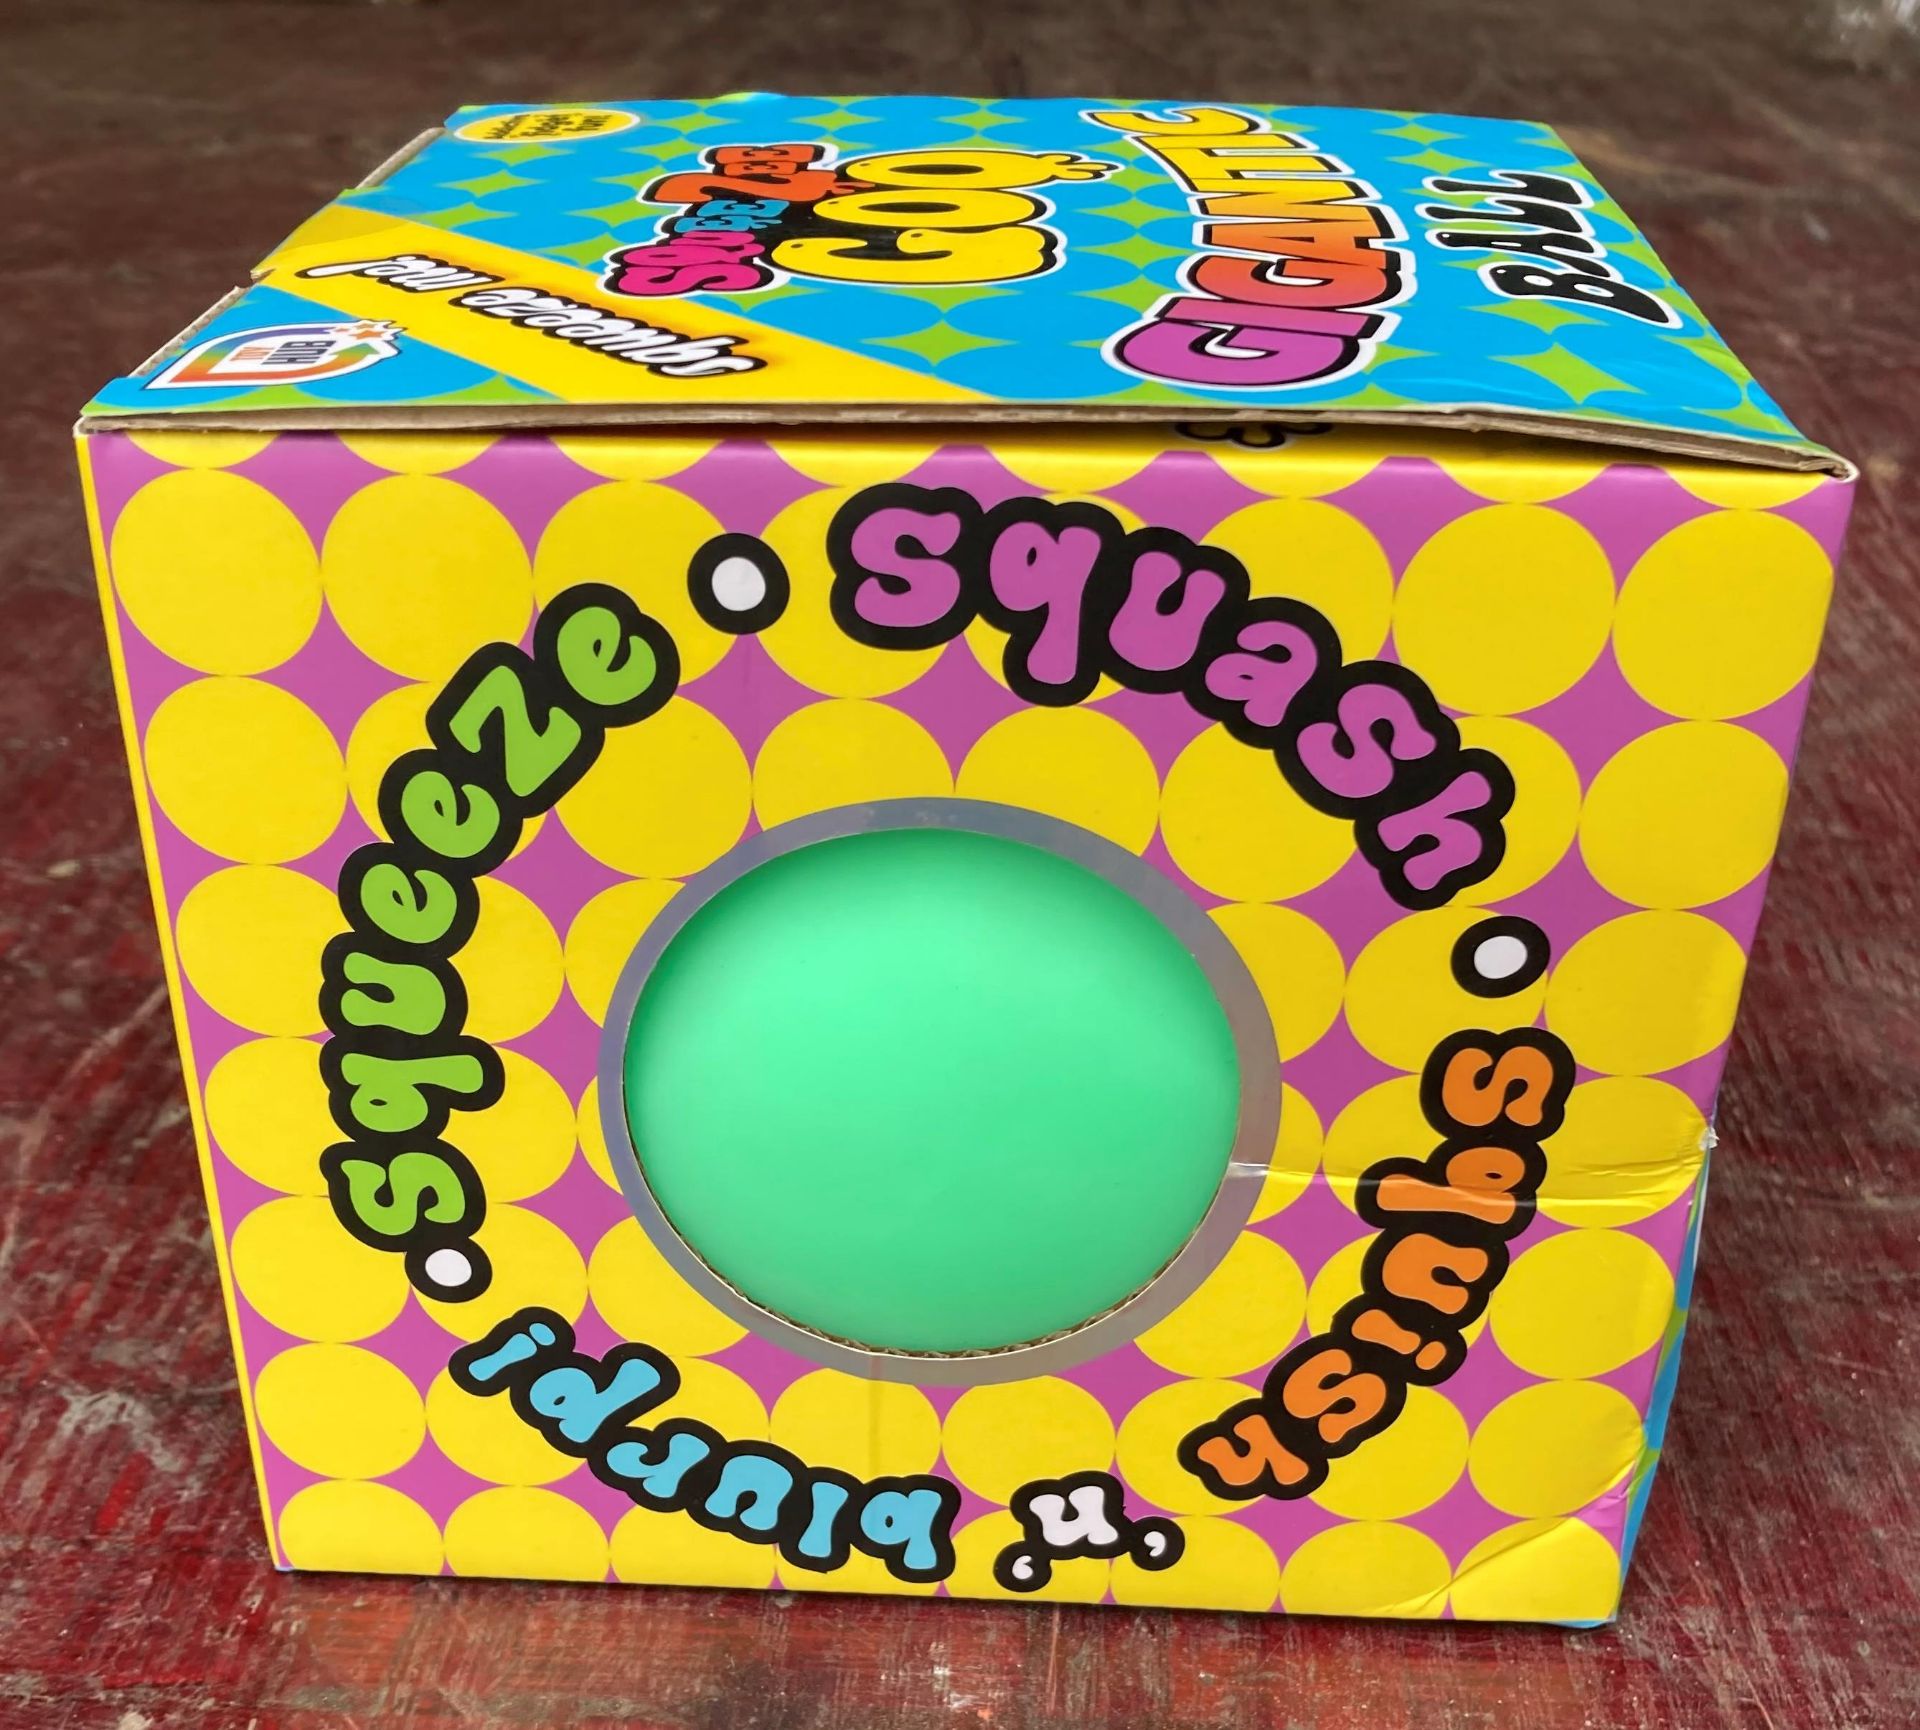 12 x Gigantic Goo squeeze balls/fidget toys (1 x outer box) (saleroom location: container 7) - Image 2 of 4